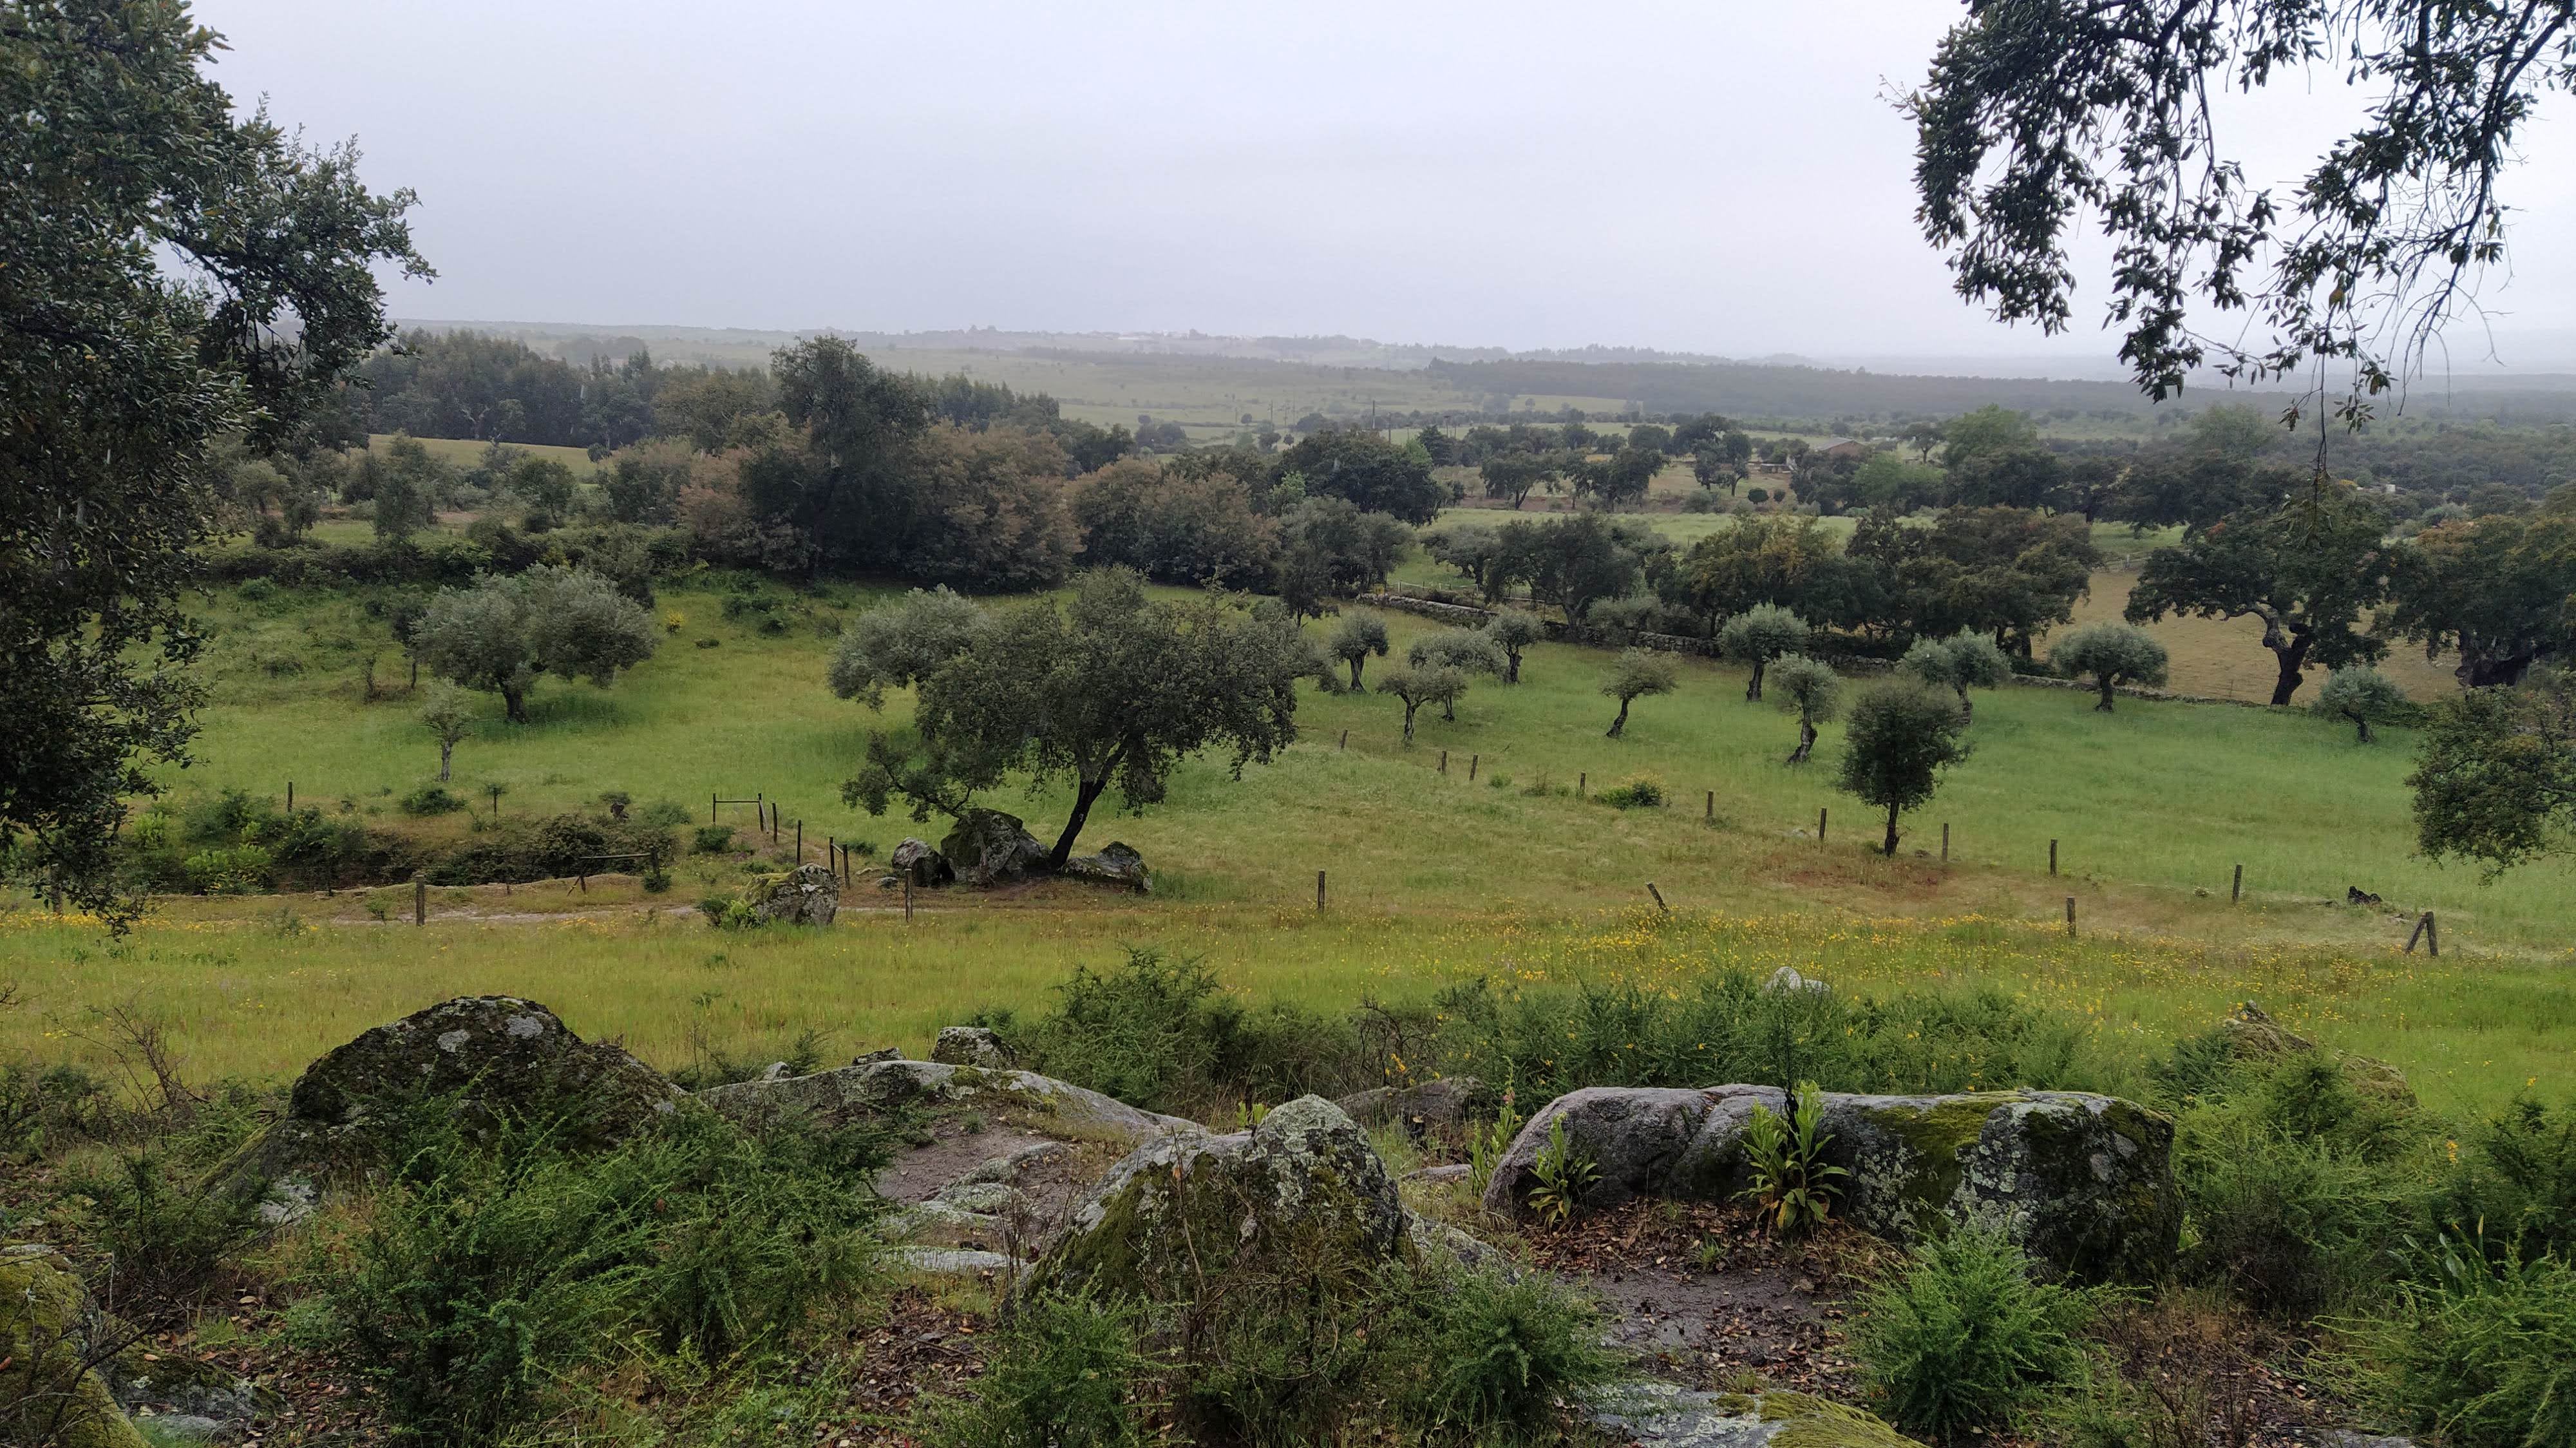 Landscouting in Portugal! • Life Terra